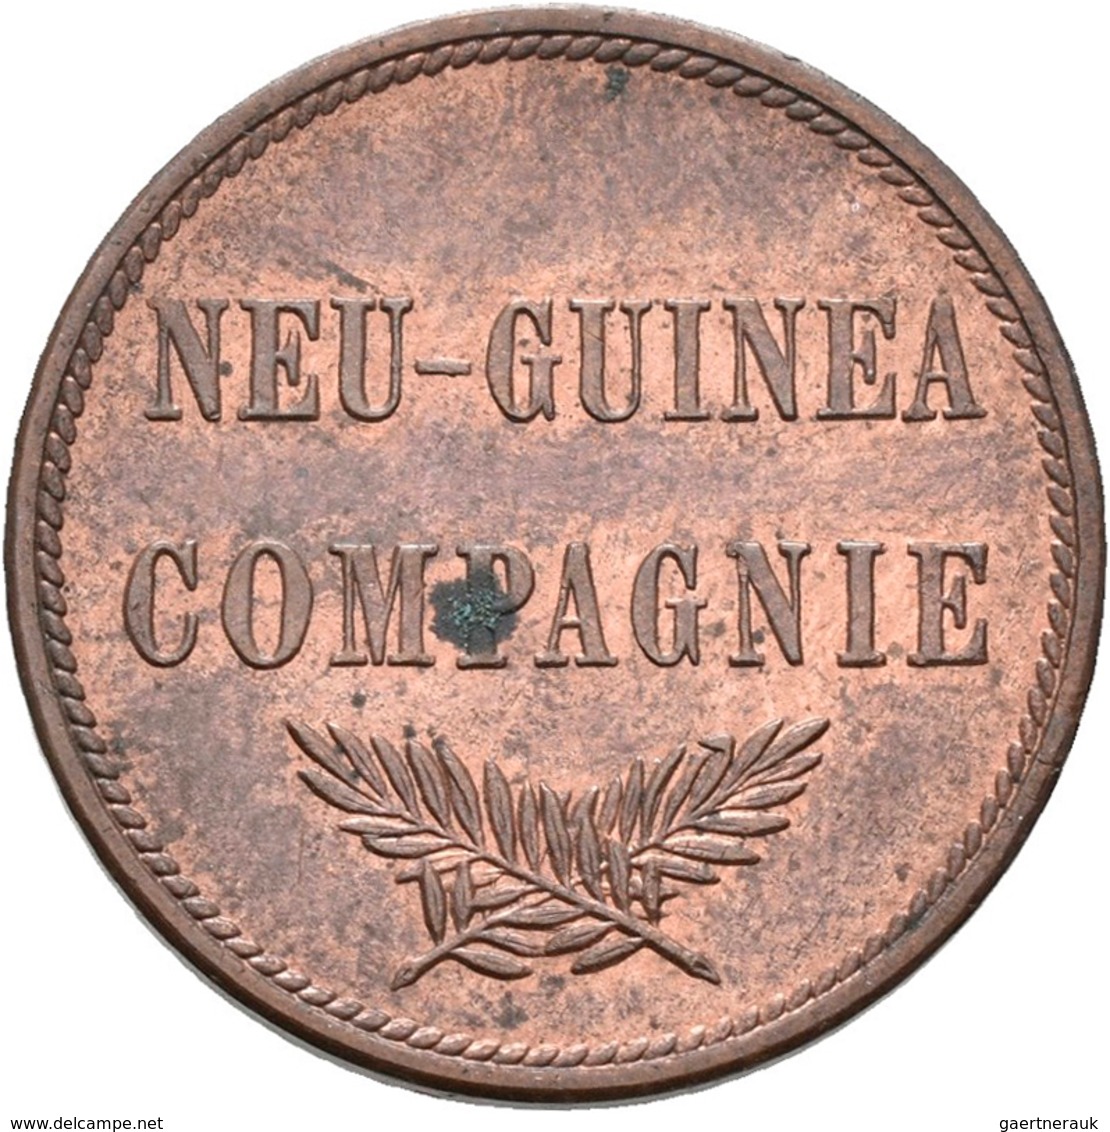 Deutsch-Neuguinea: 2 Neu-Guinea Pfennig 1894 A, Jaeger 702, Leichte Patina, Vorzüglich. - German New Guinea